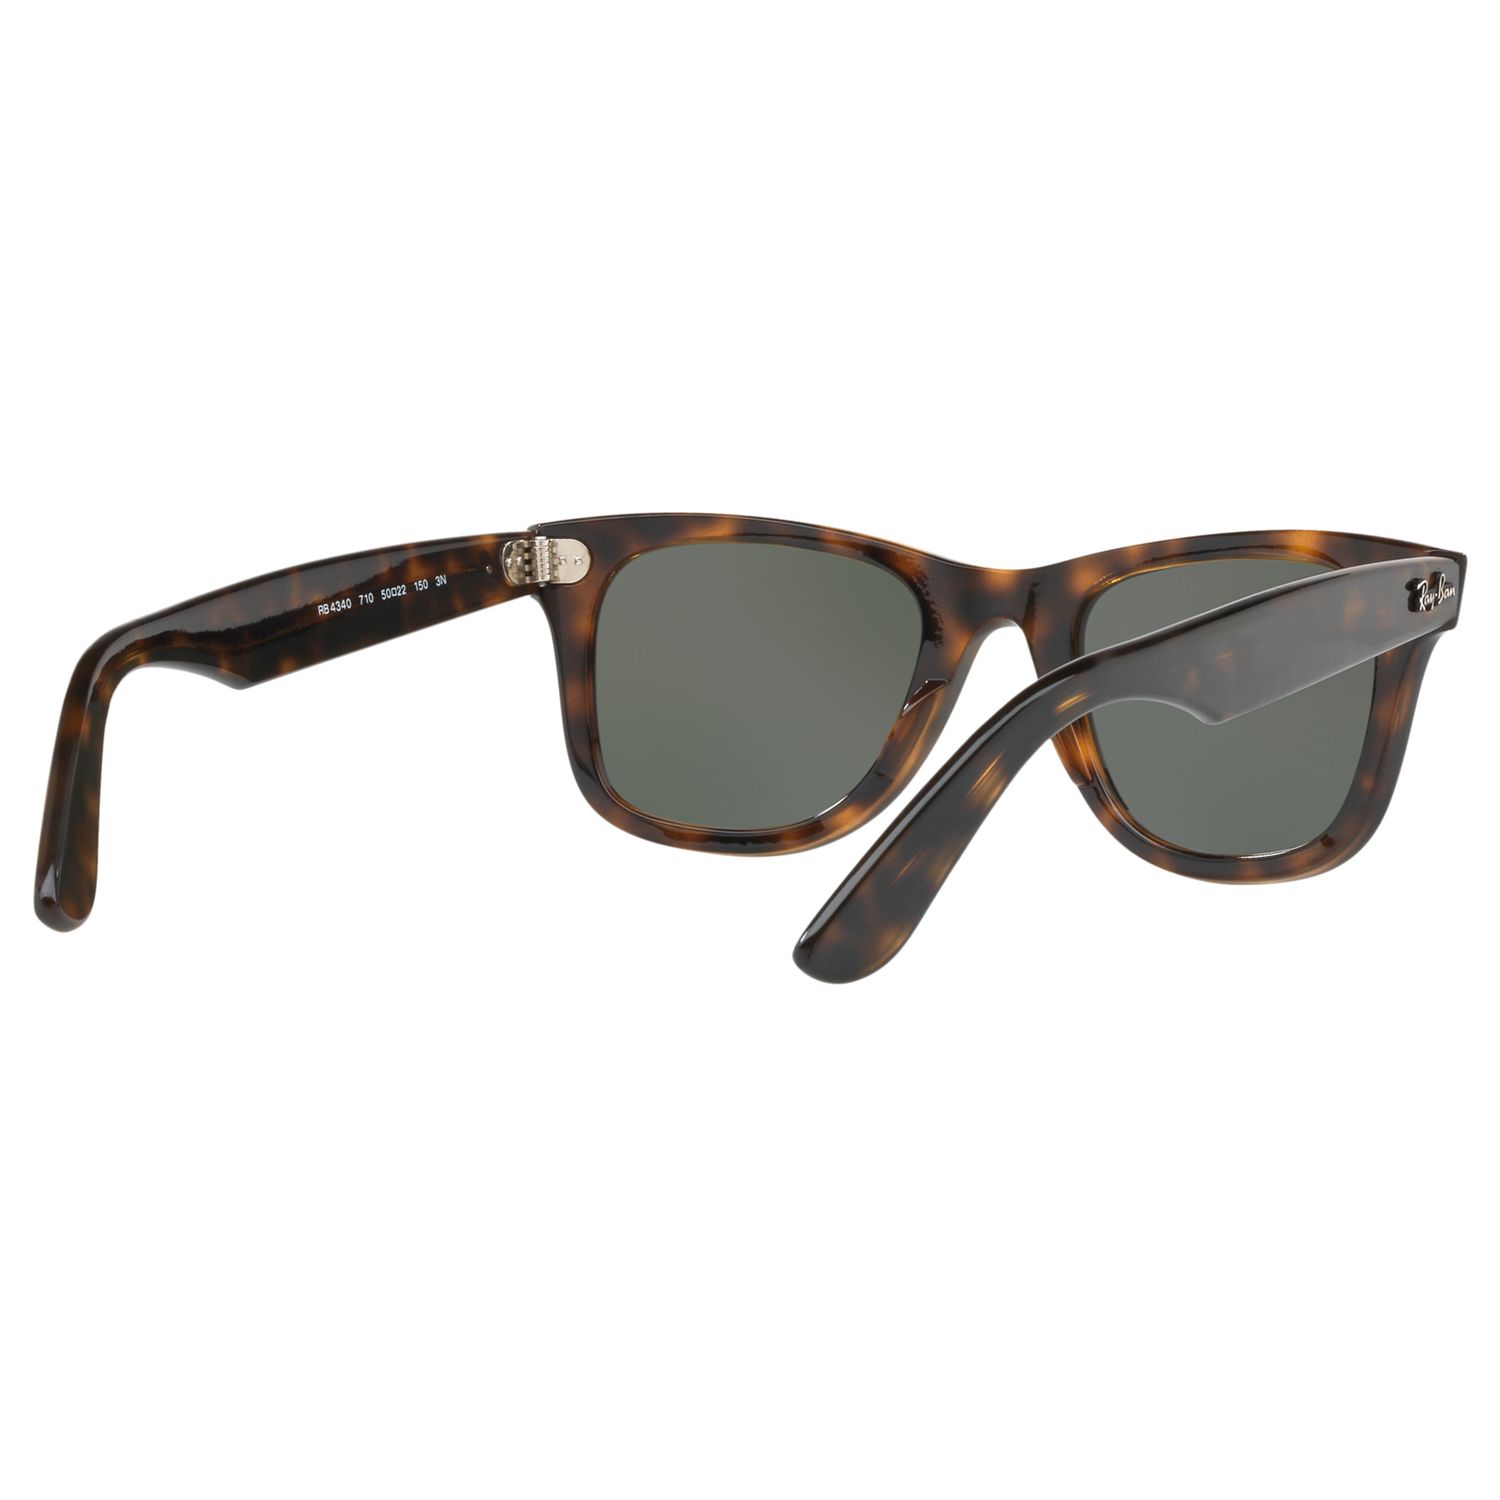 Ray-Ban RB4340 Wayfarer Sunglasses, Tortoise/Grey at John Lewis & Partners